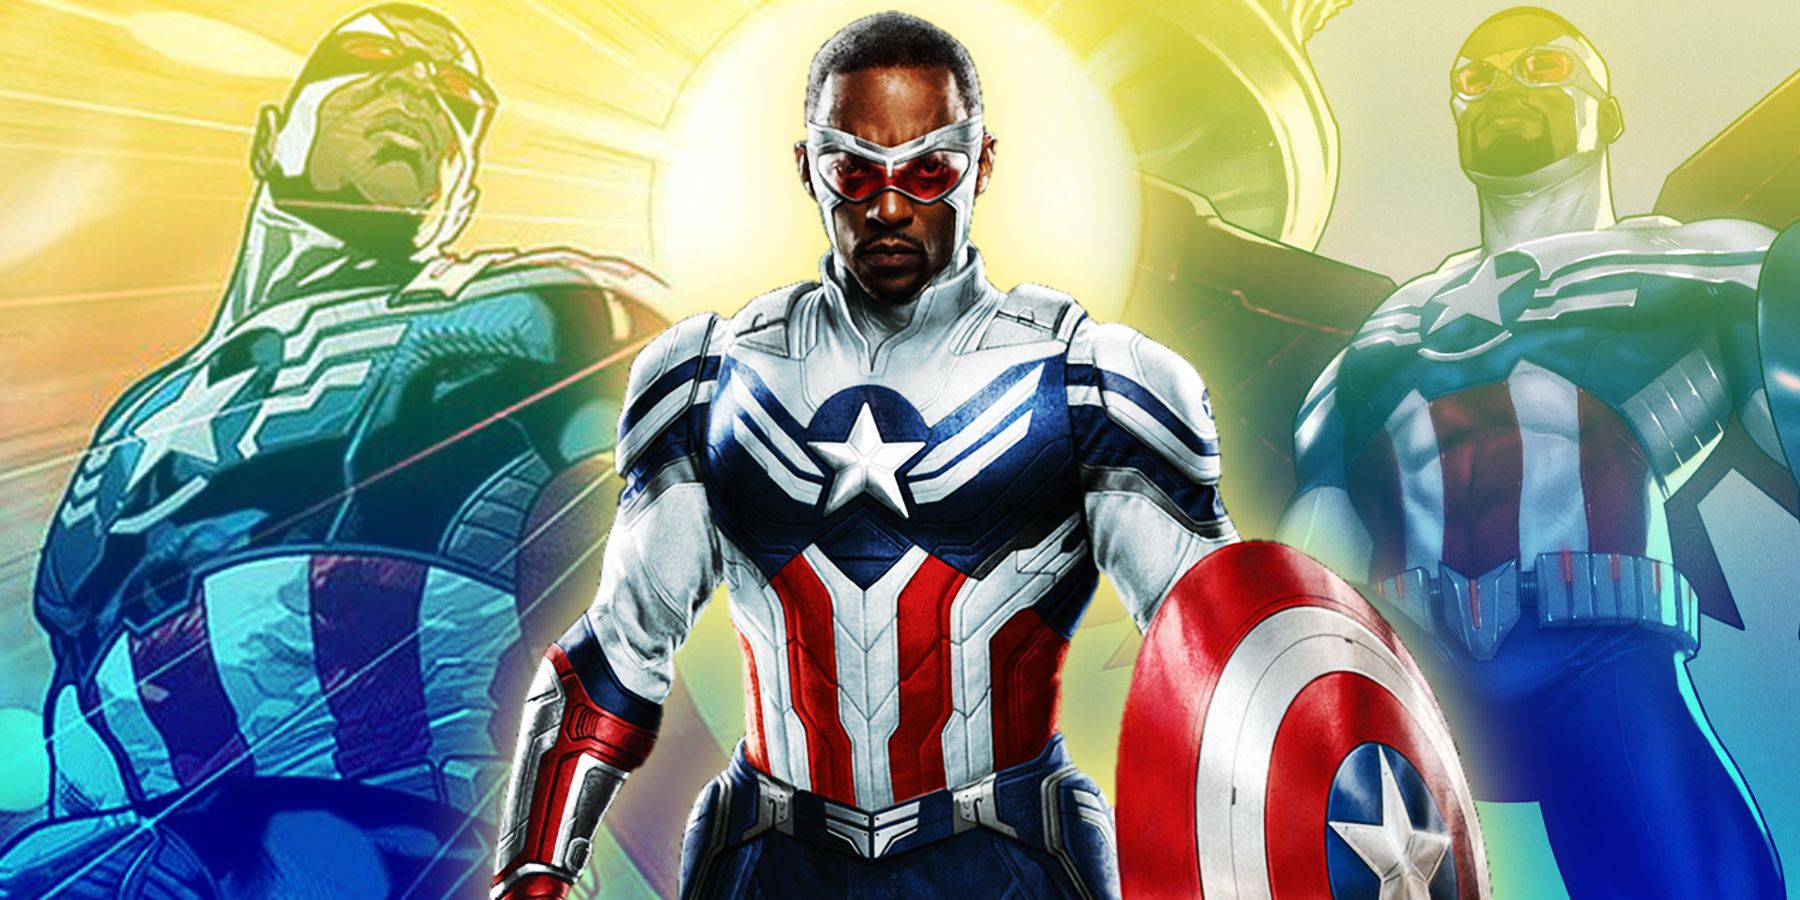 Anthony Mackie as Sam Wilson/ Captain America from the MCU and Sam Wilson's Captain America as seen in Marvel comcis